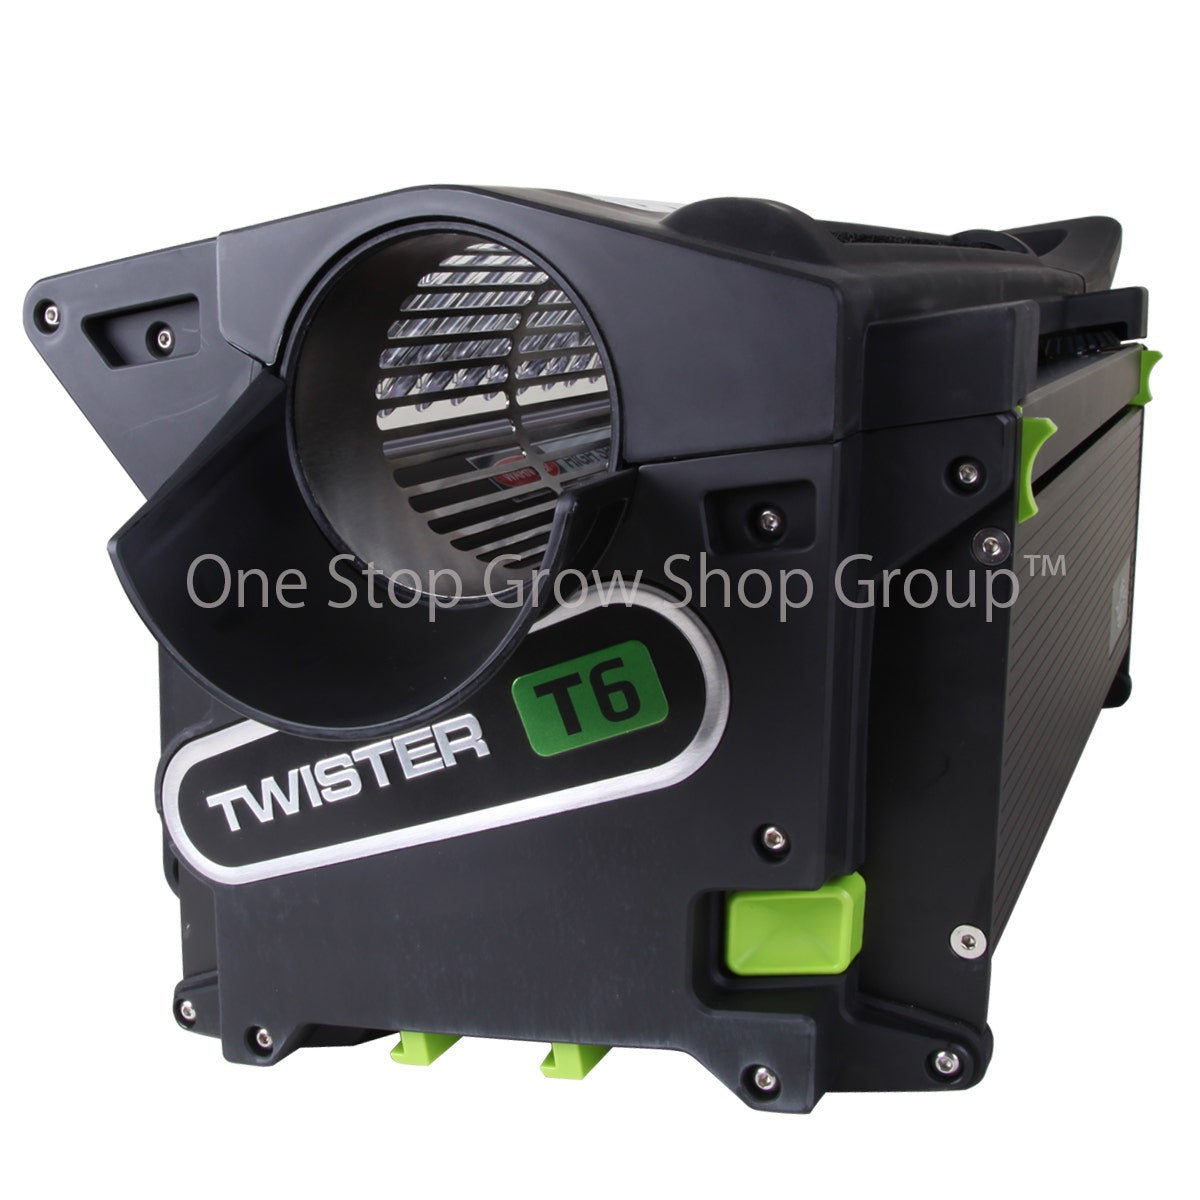 Twister Trimmer T6 - Wet Trimmer